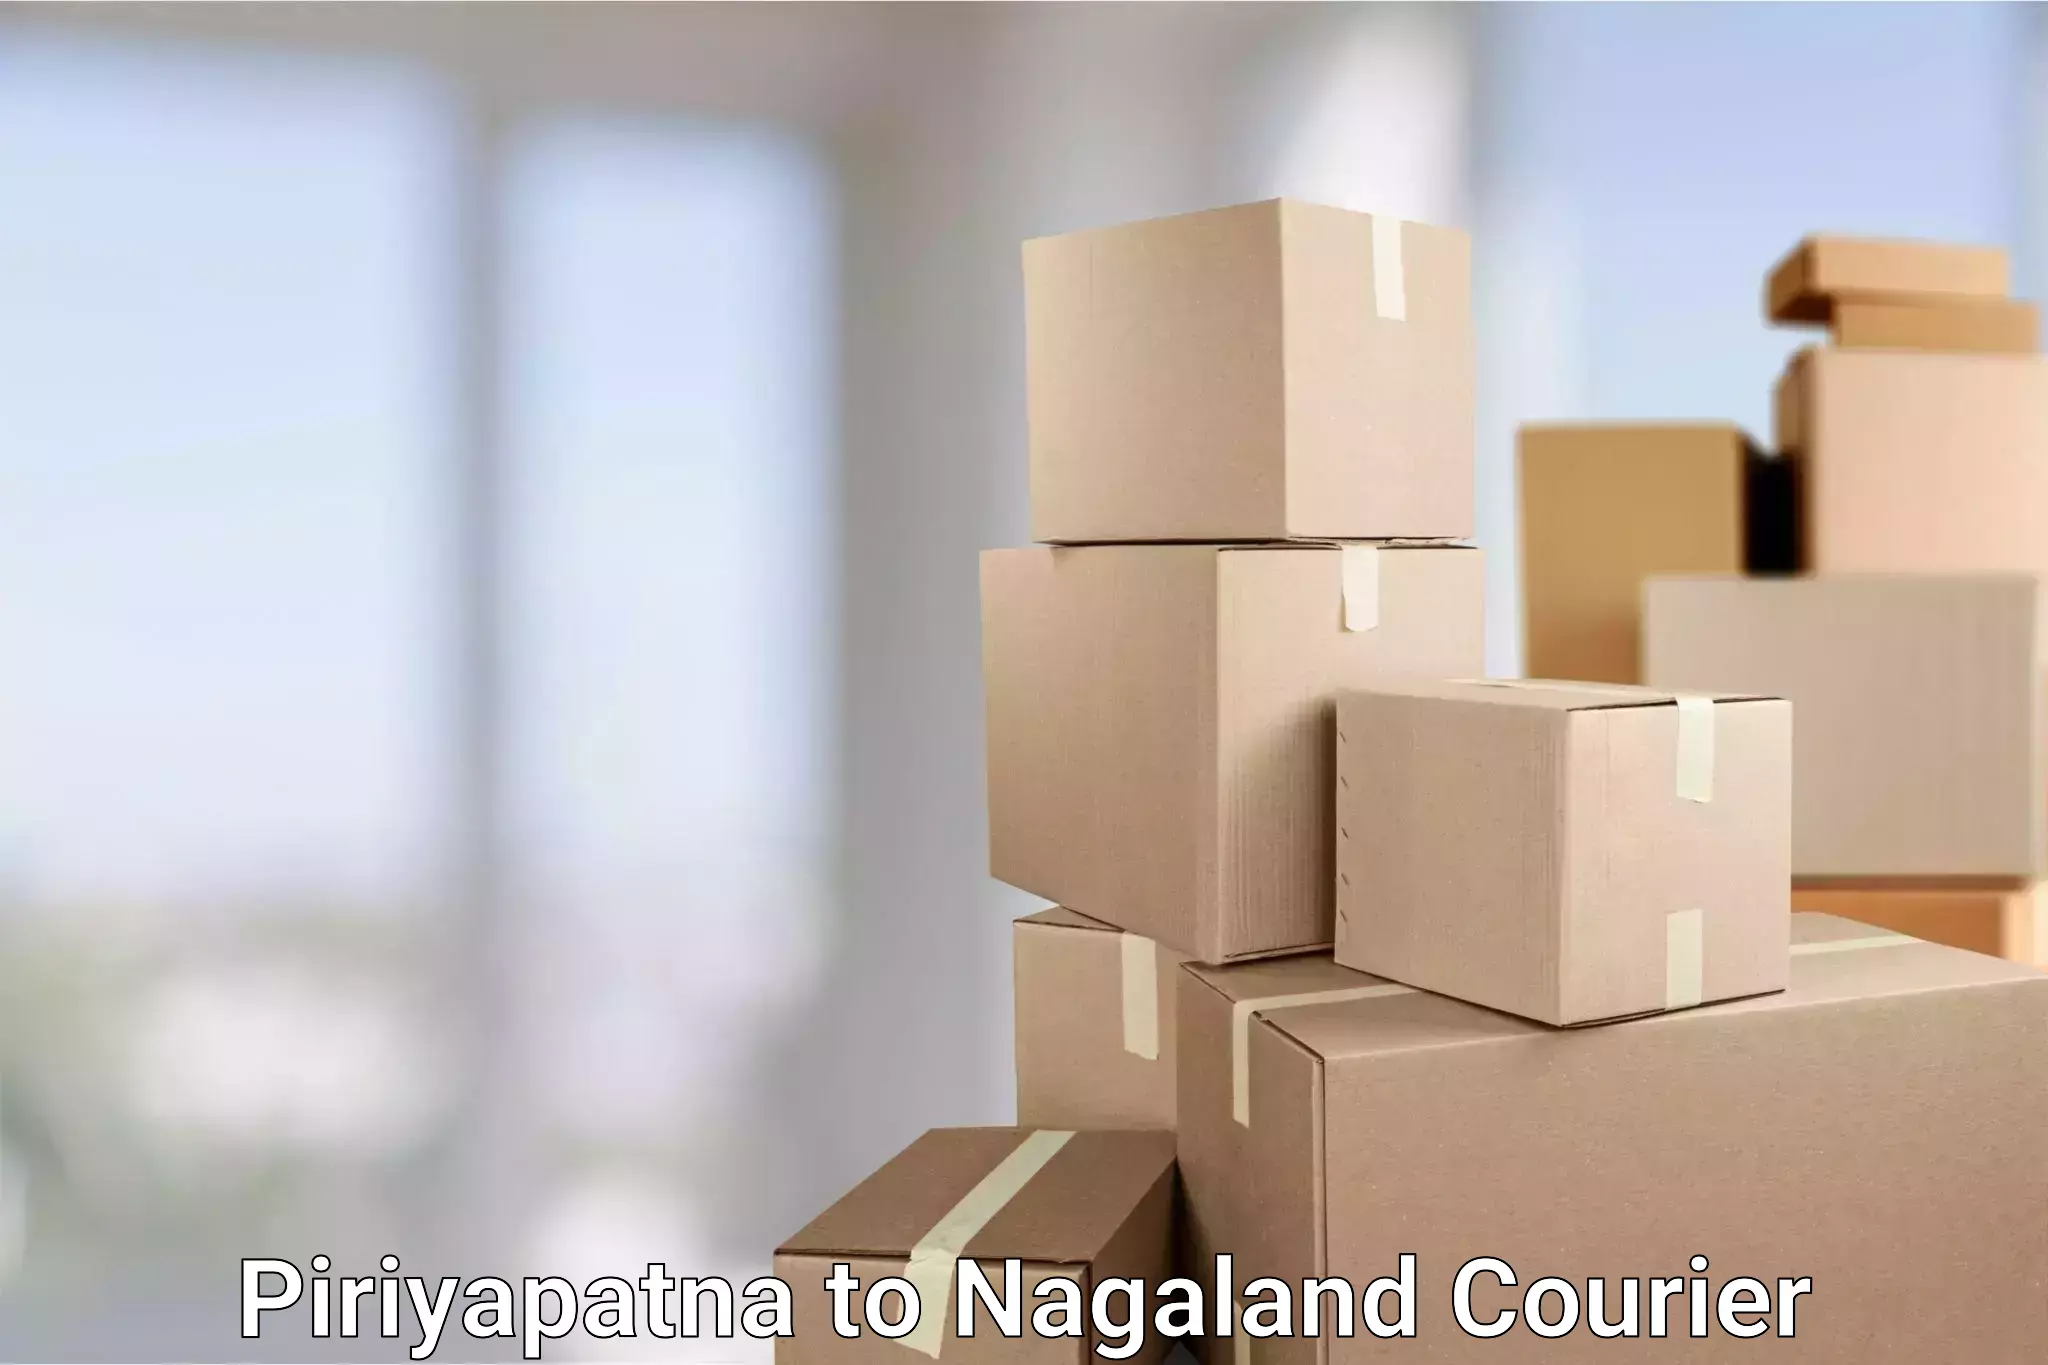 User-friendly courier app Piriyapatna to Nagaland